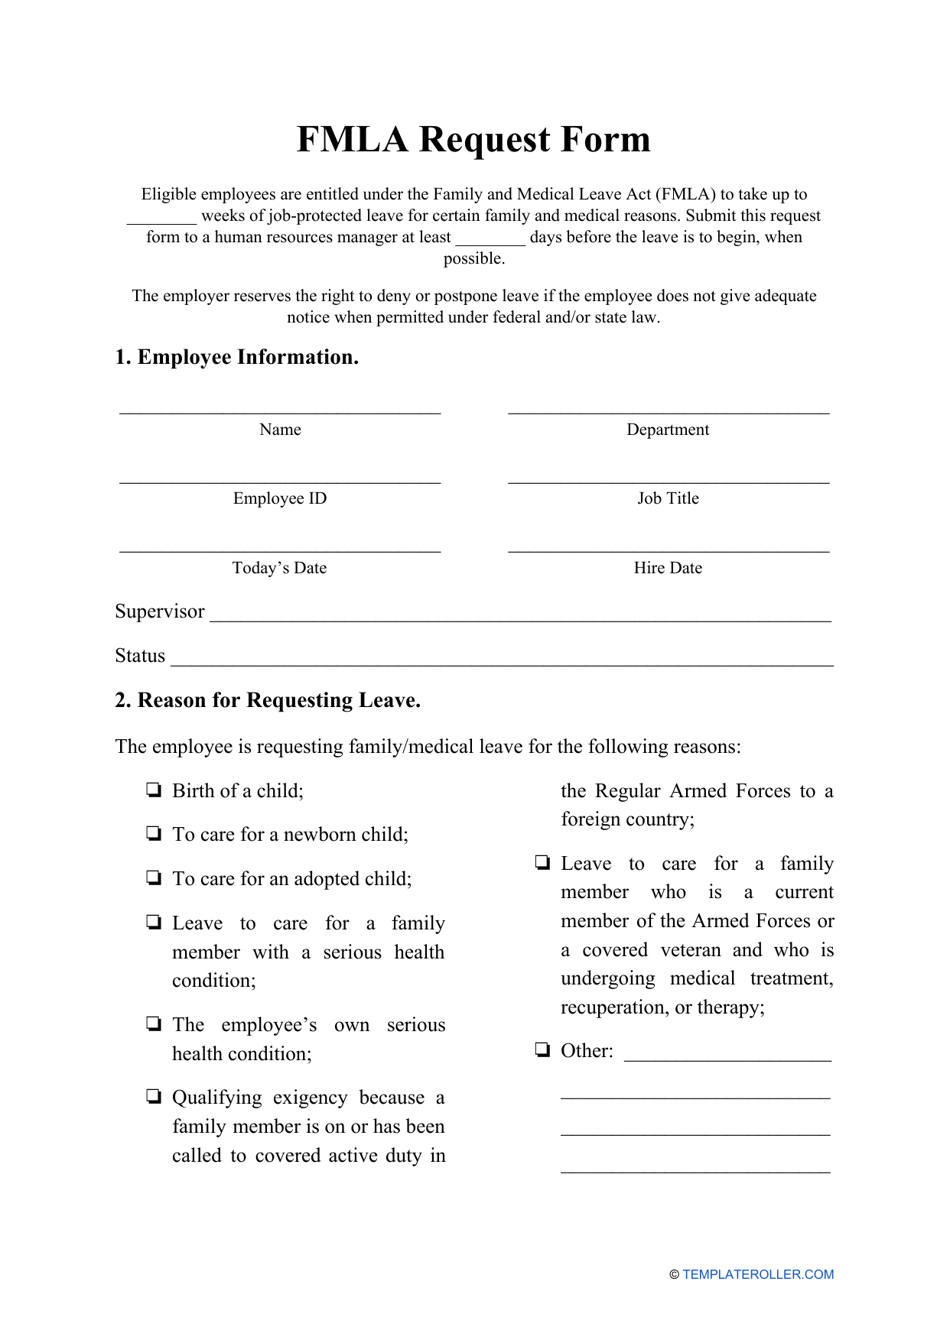 Fmla Request Form Template